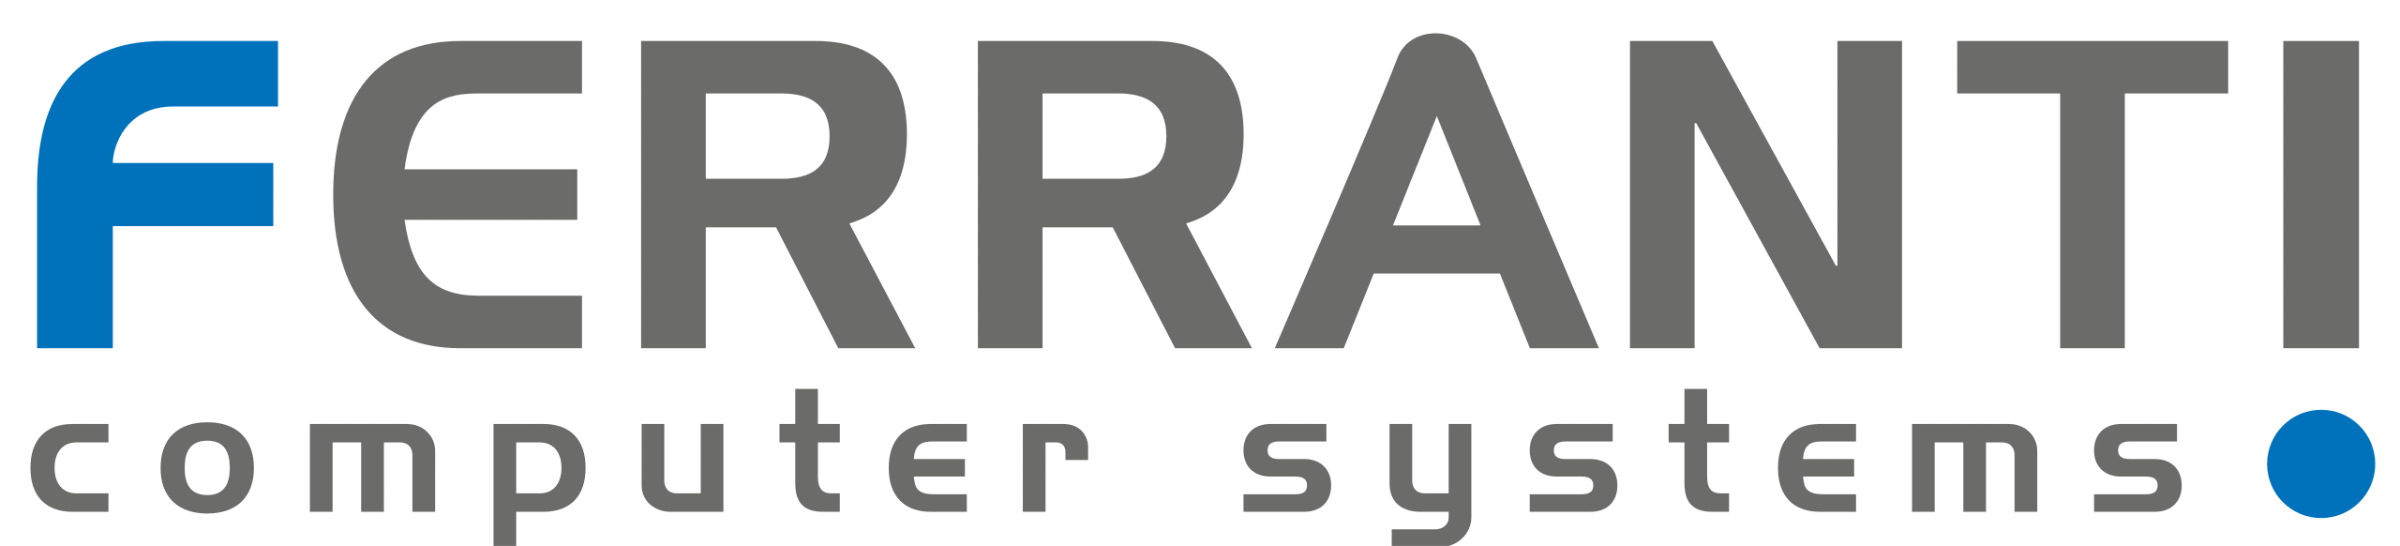 Ferranti_Computer_Systems_logo.svg